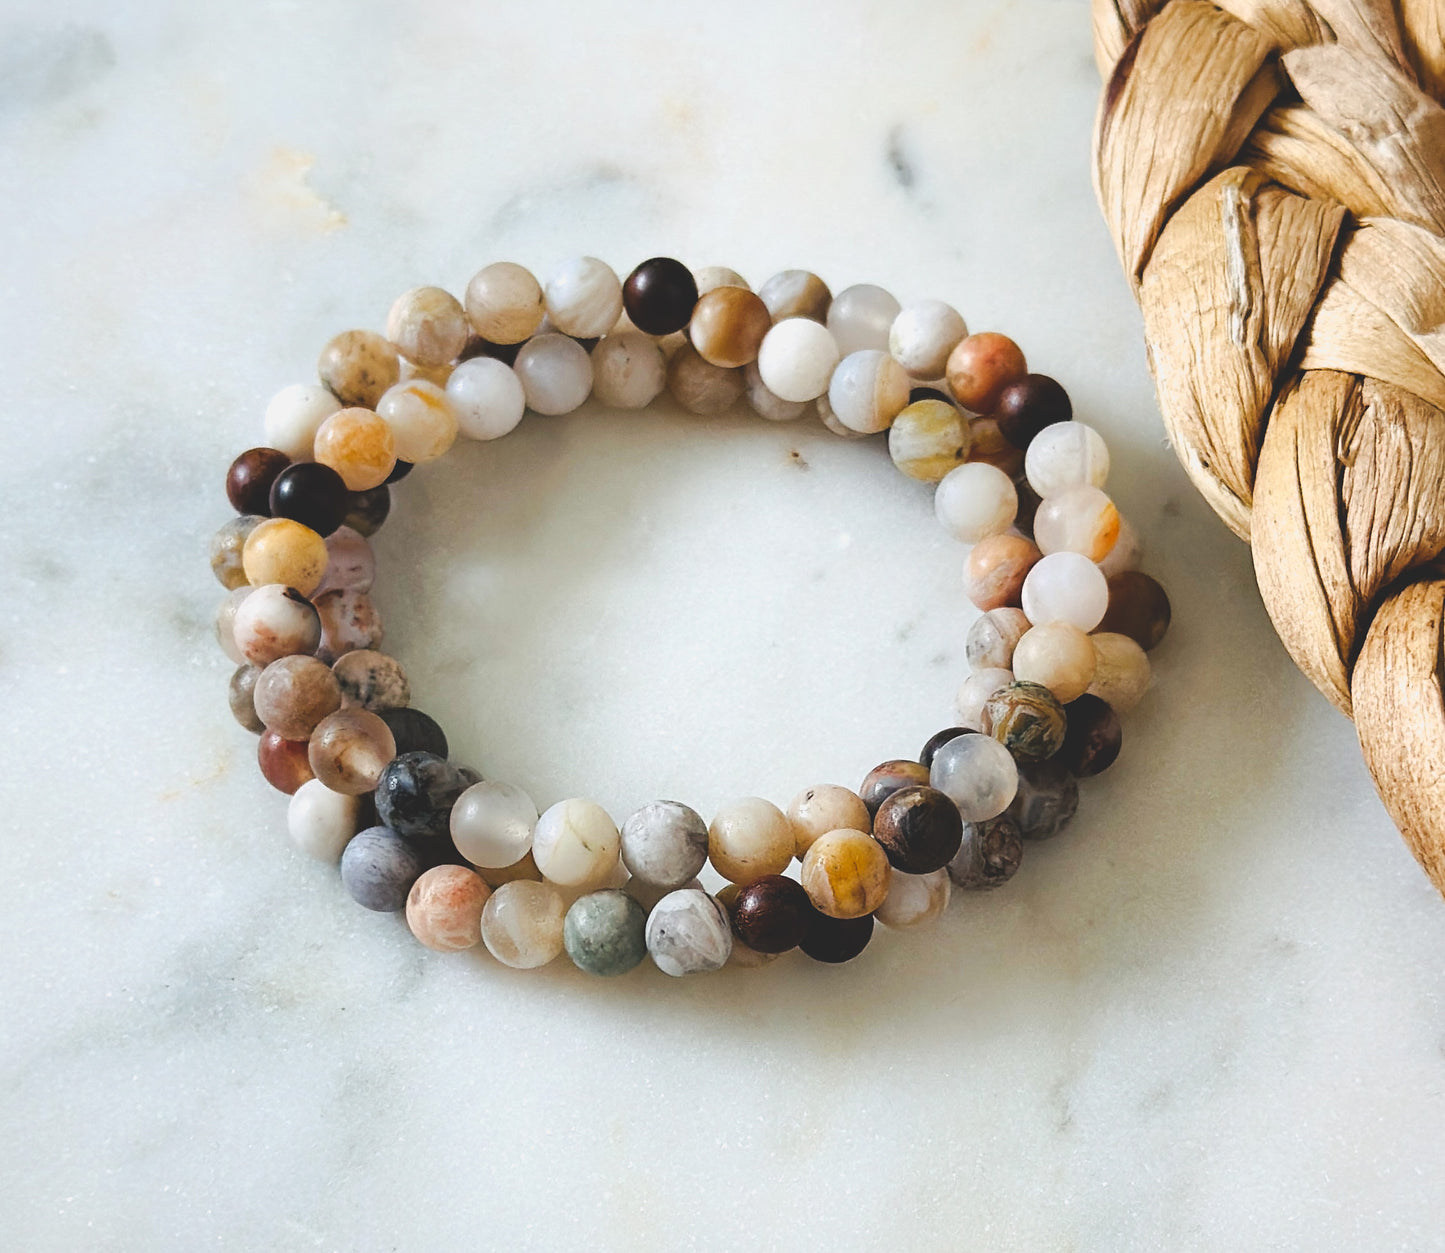 Gemstone wrap bracelet created with Bamboo Leaf Agate and Sandalwood